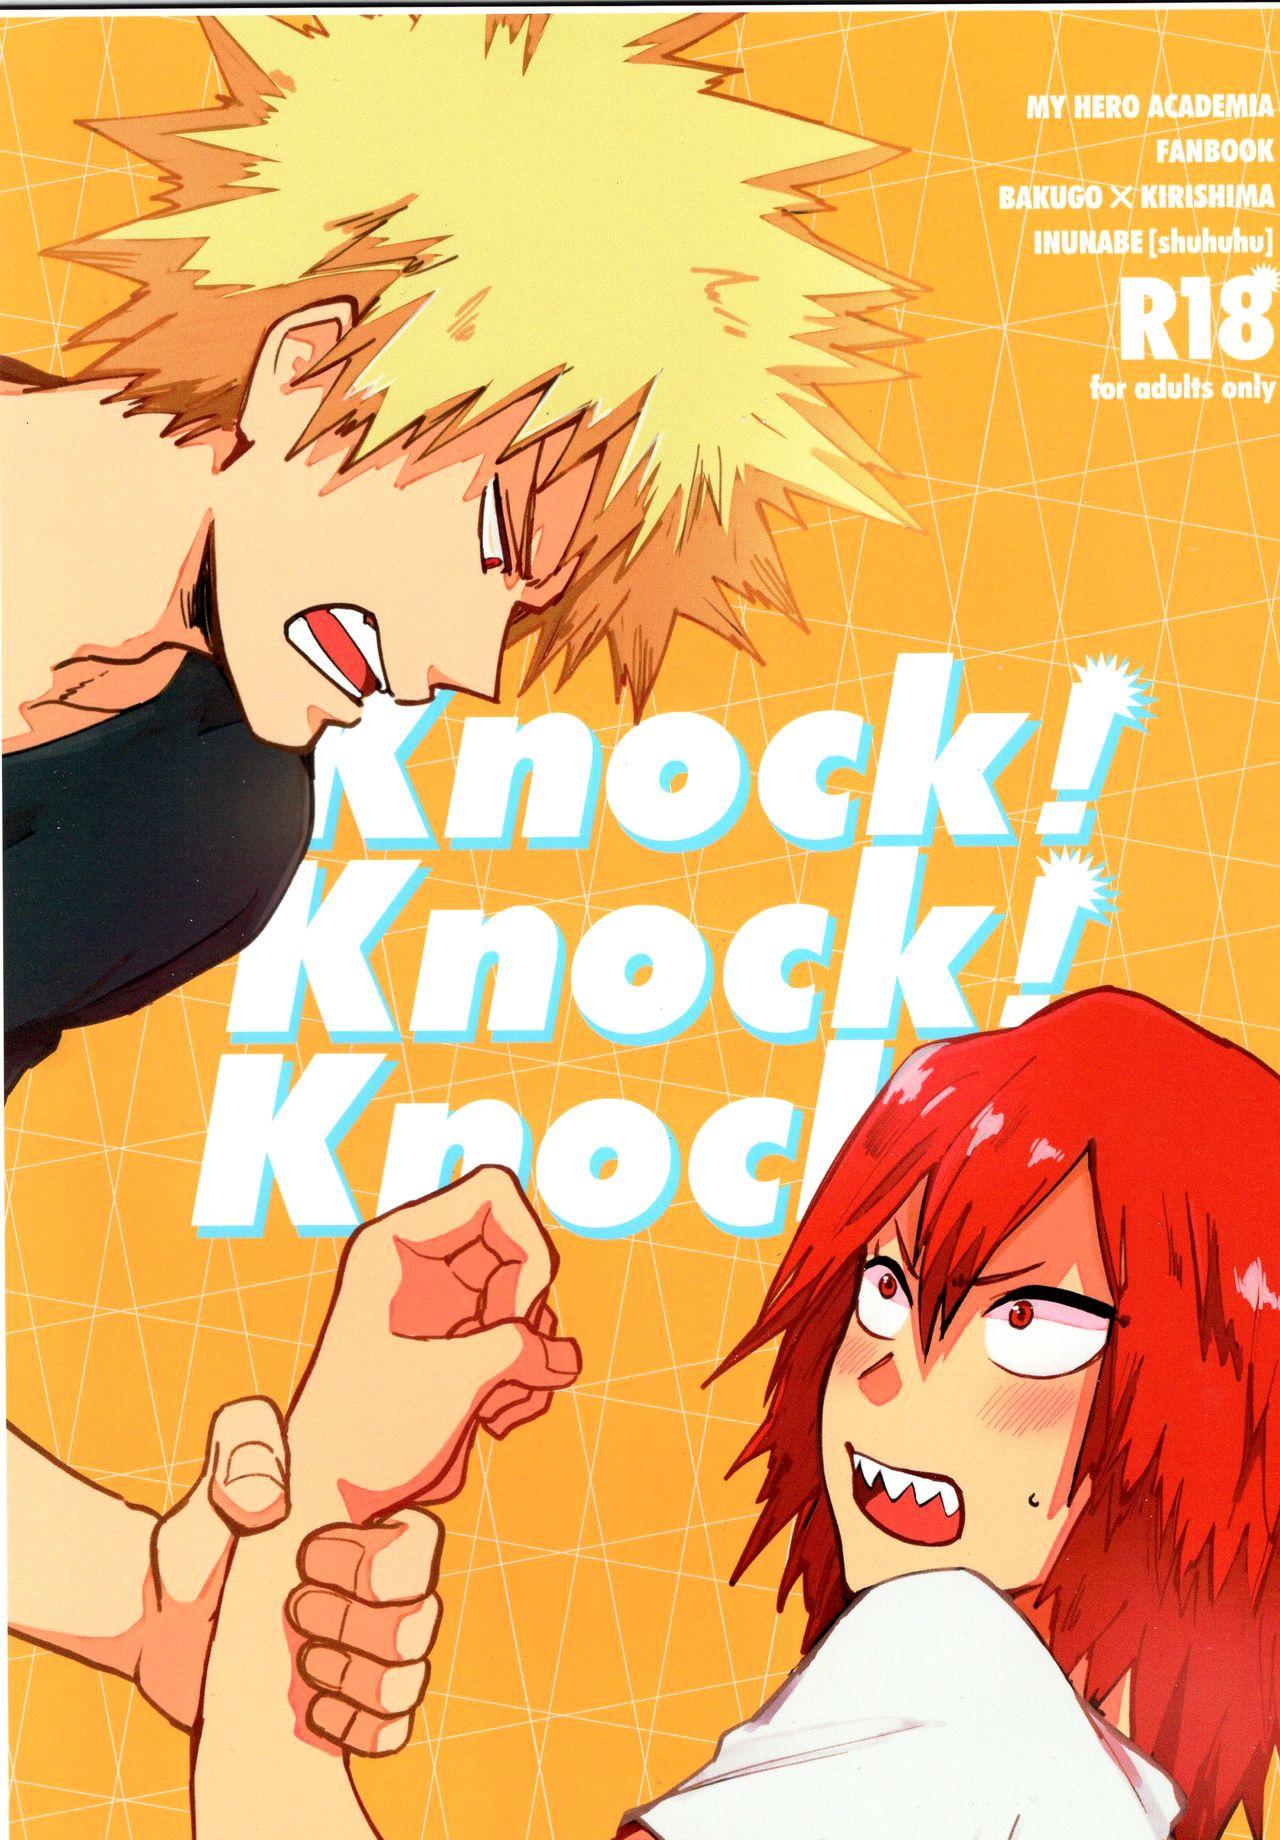 Humiliation Knock! Knock! Knock! - My hero academia Animated - Picture 1